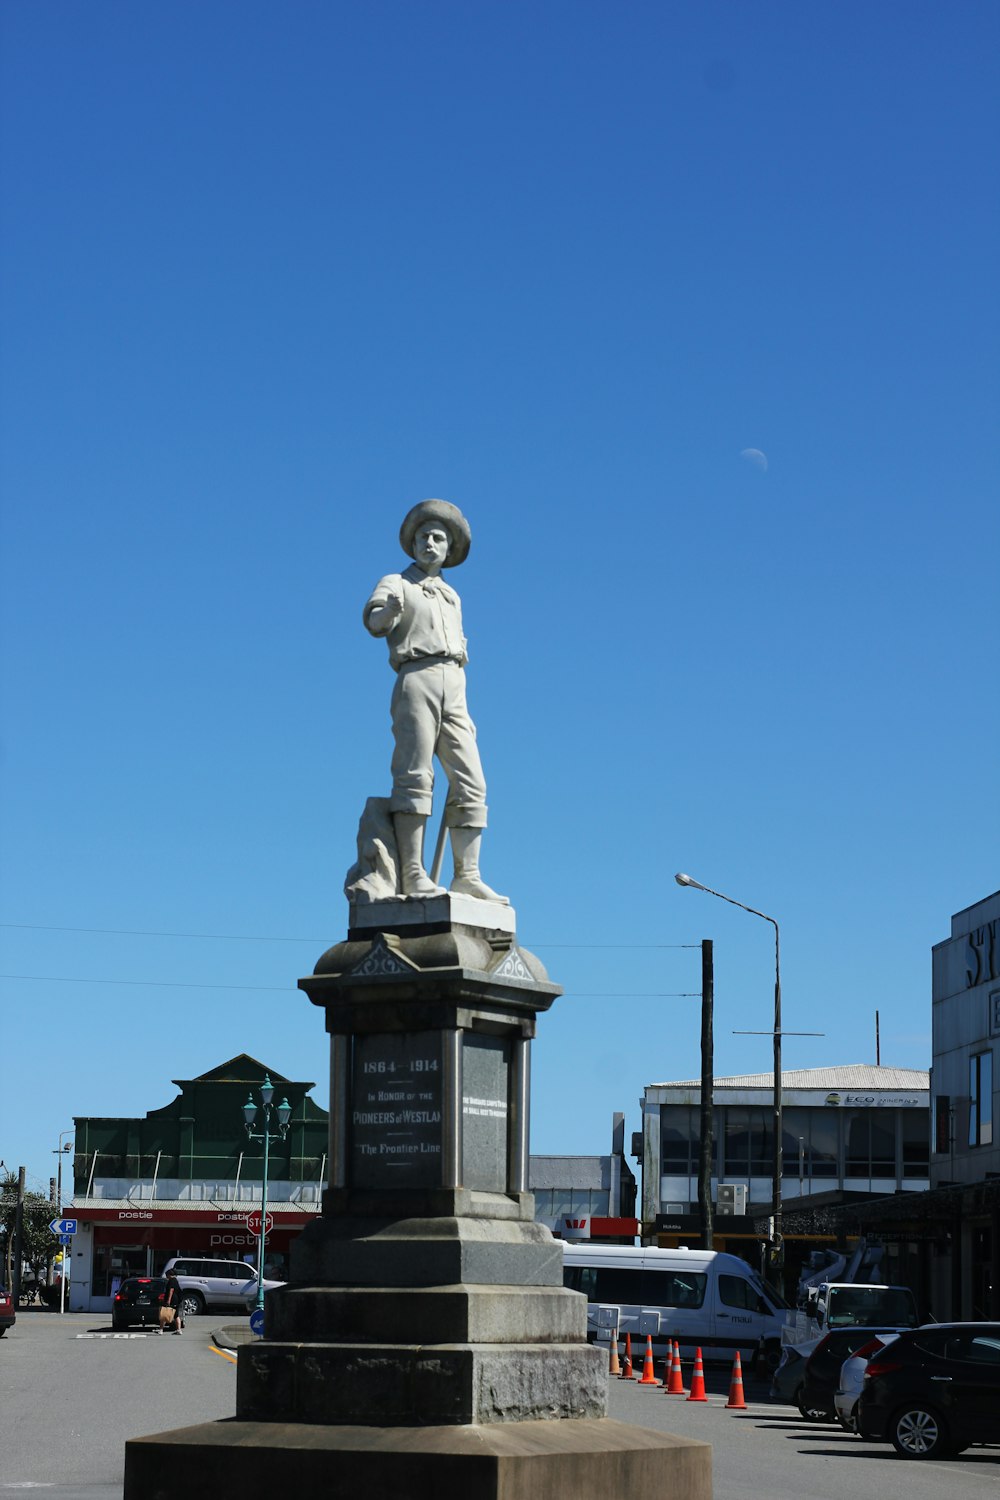 man in hat statue under blue sky during daytime